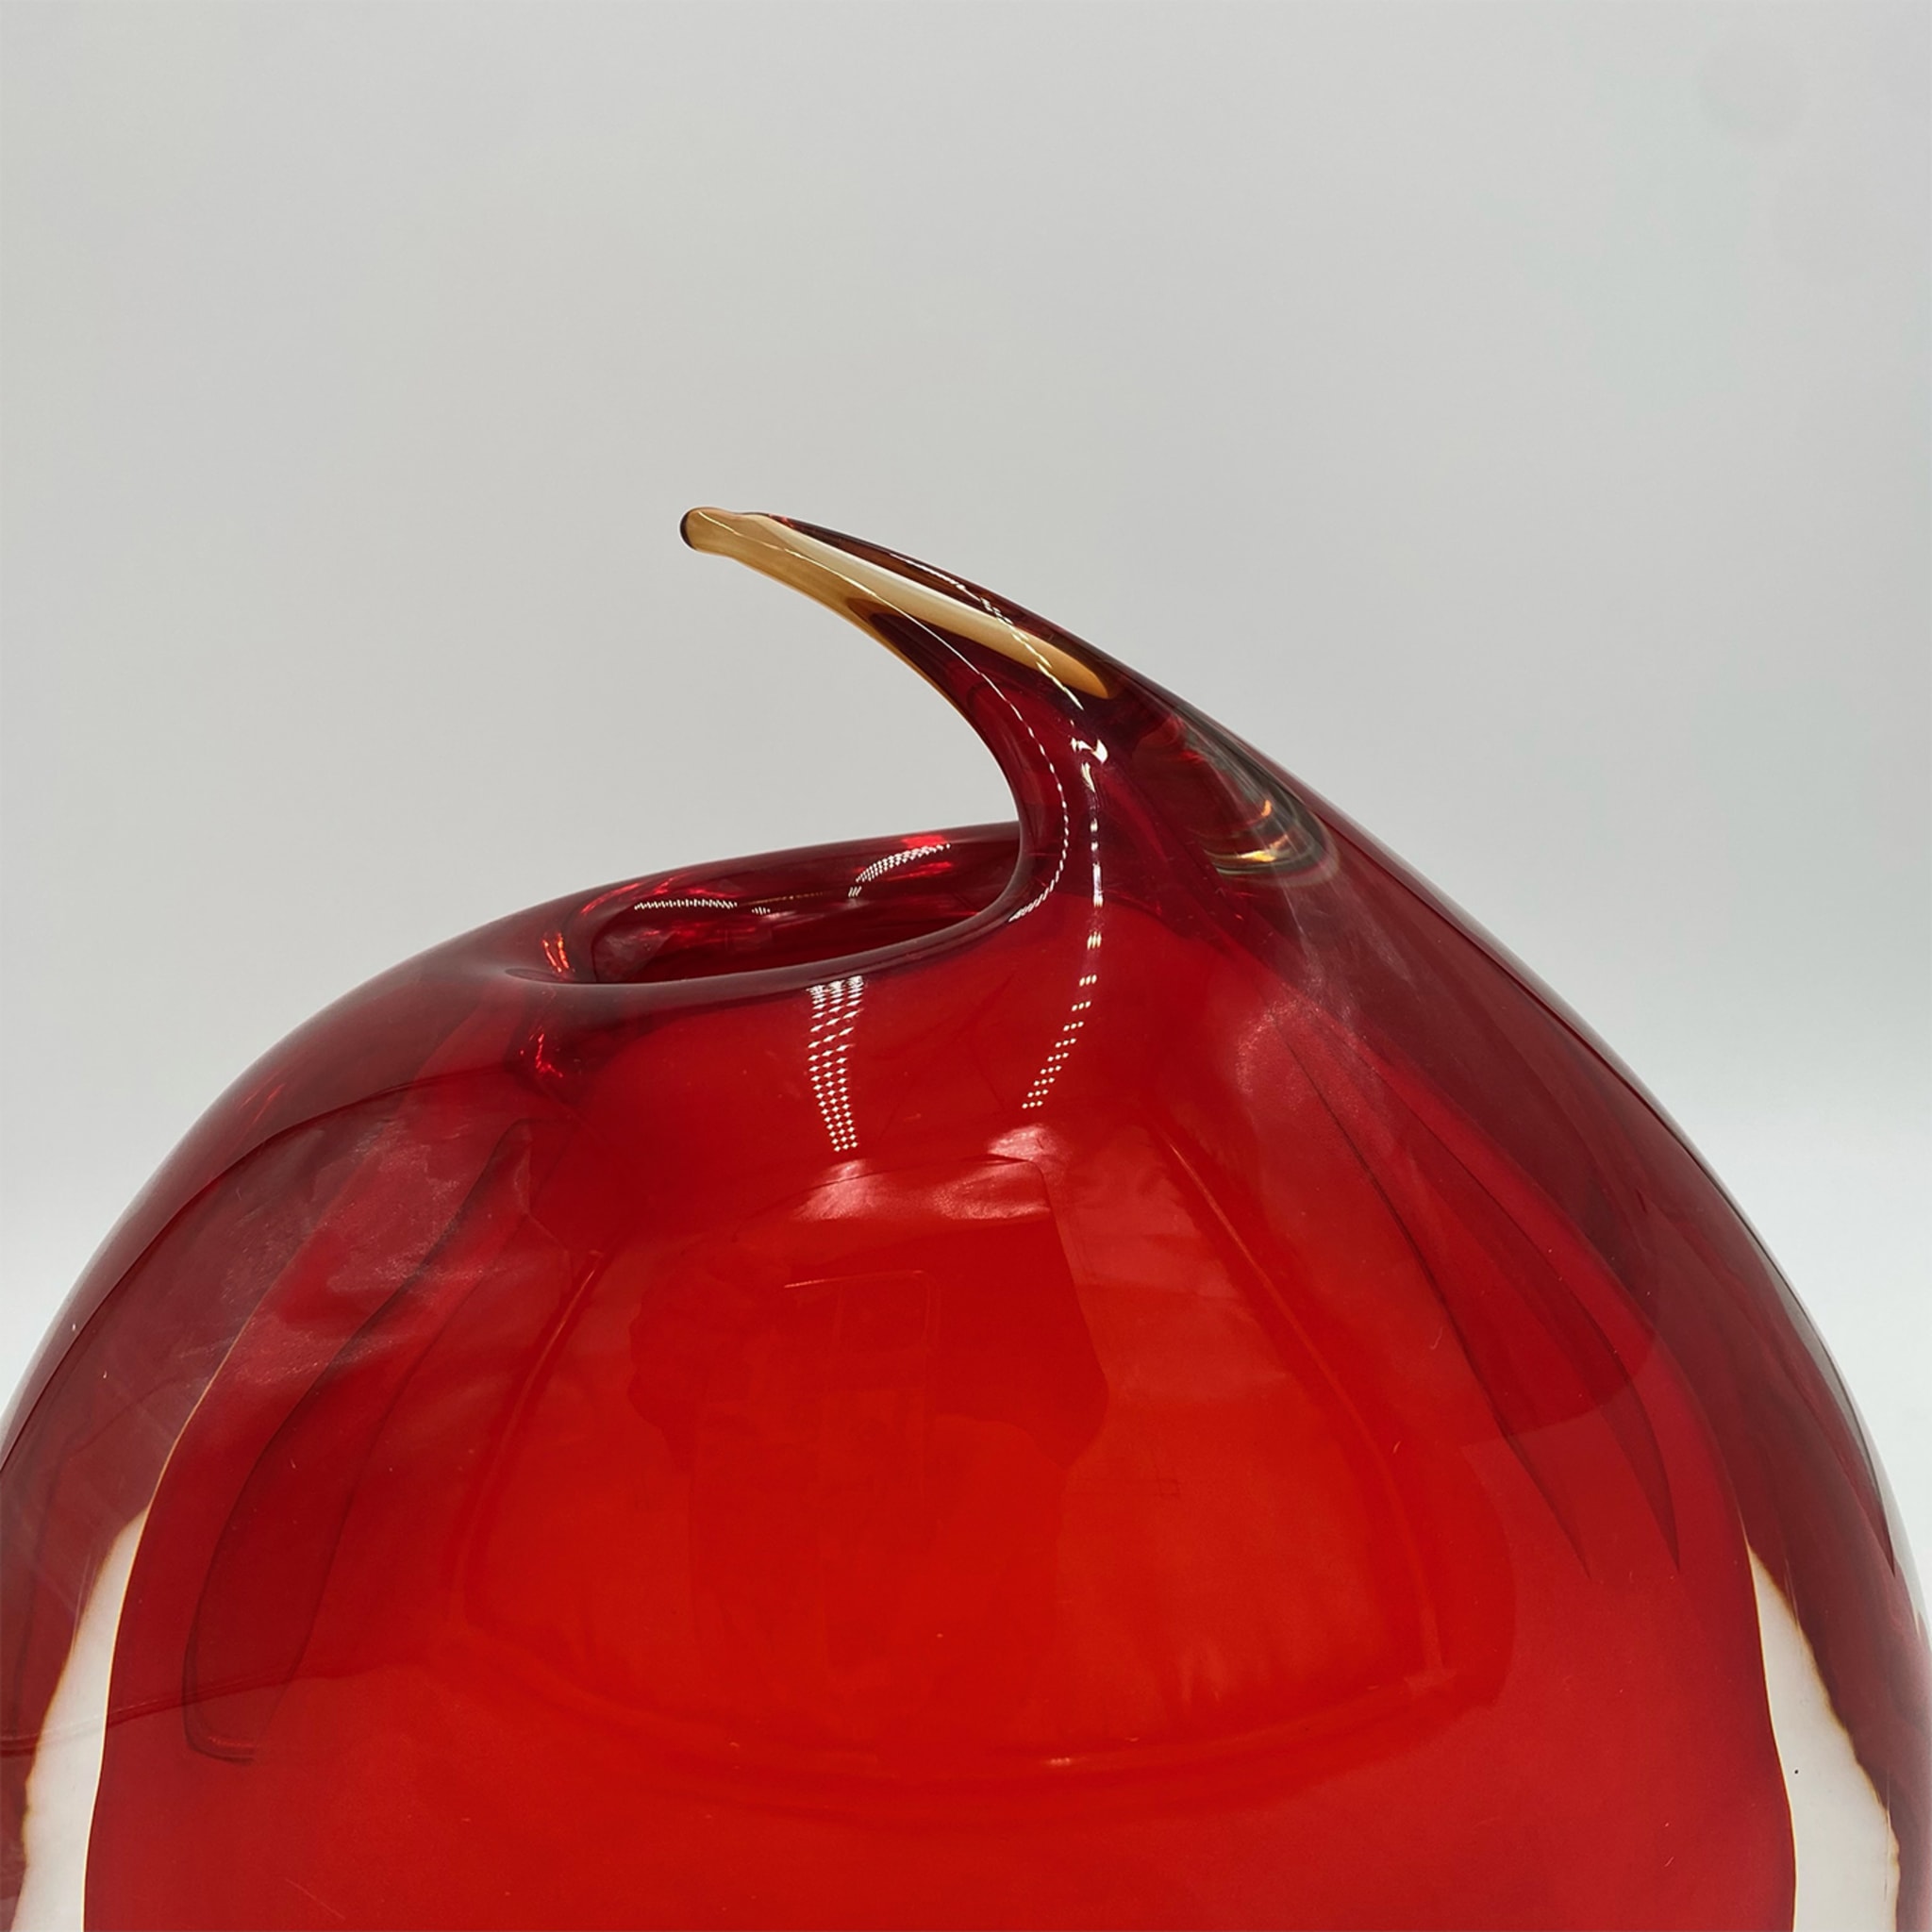 Unghia Red Vase - Alternative view 1